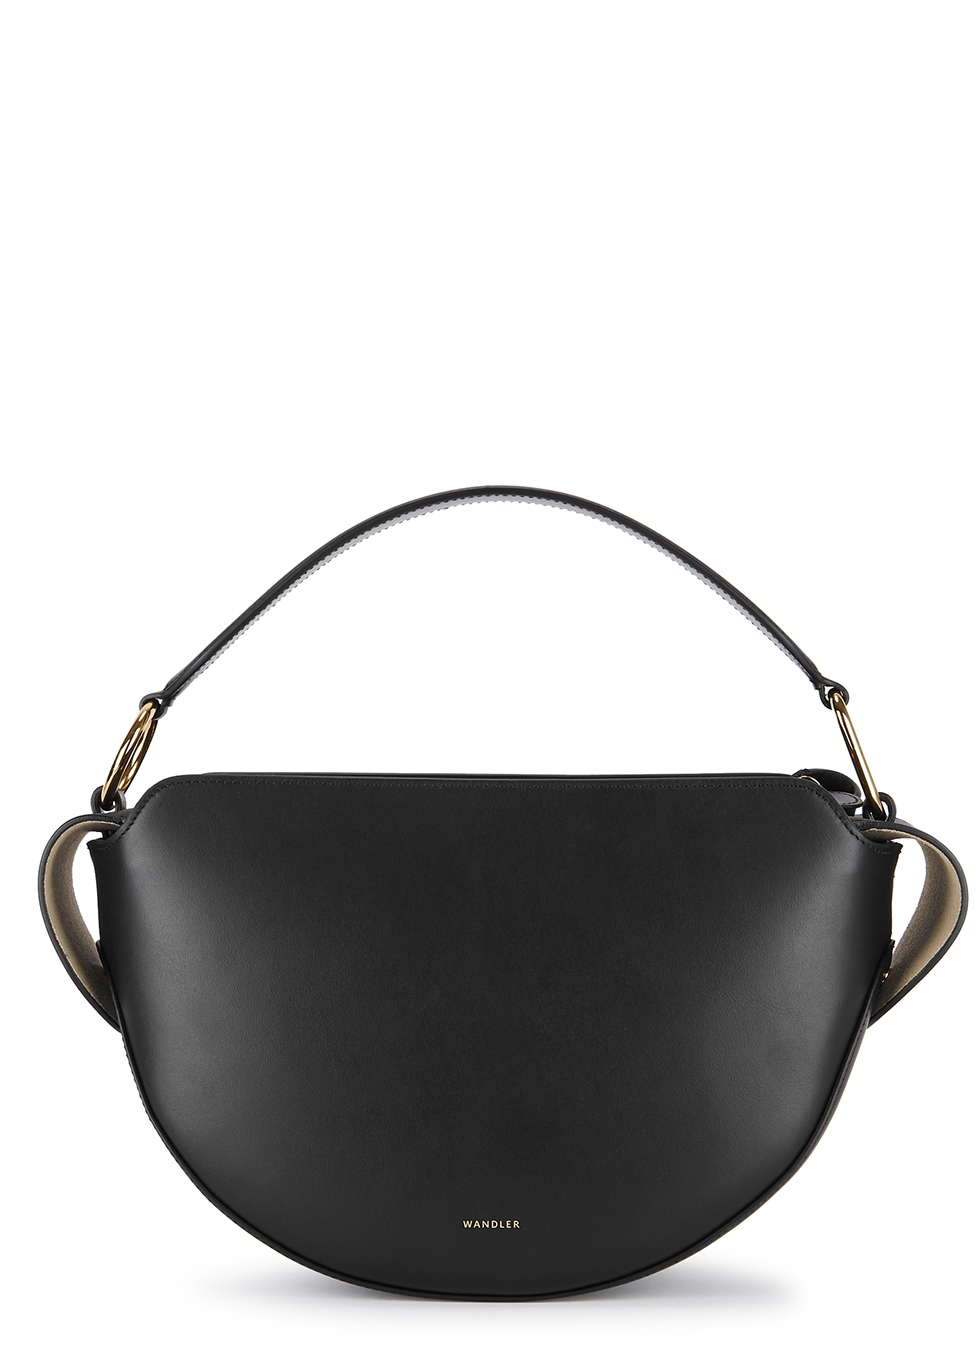 Wandler Yara black leather top handle bag - Harvey Nichols